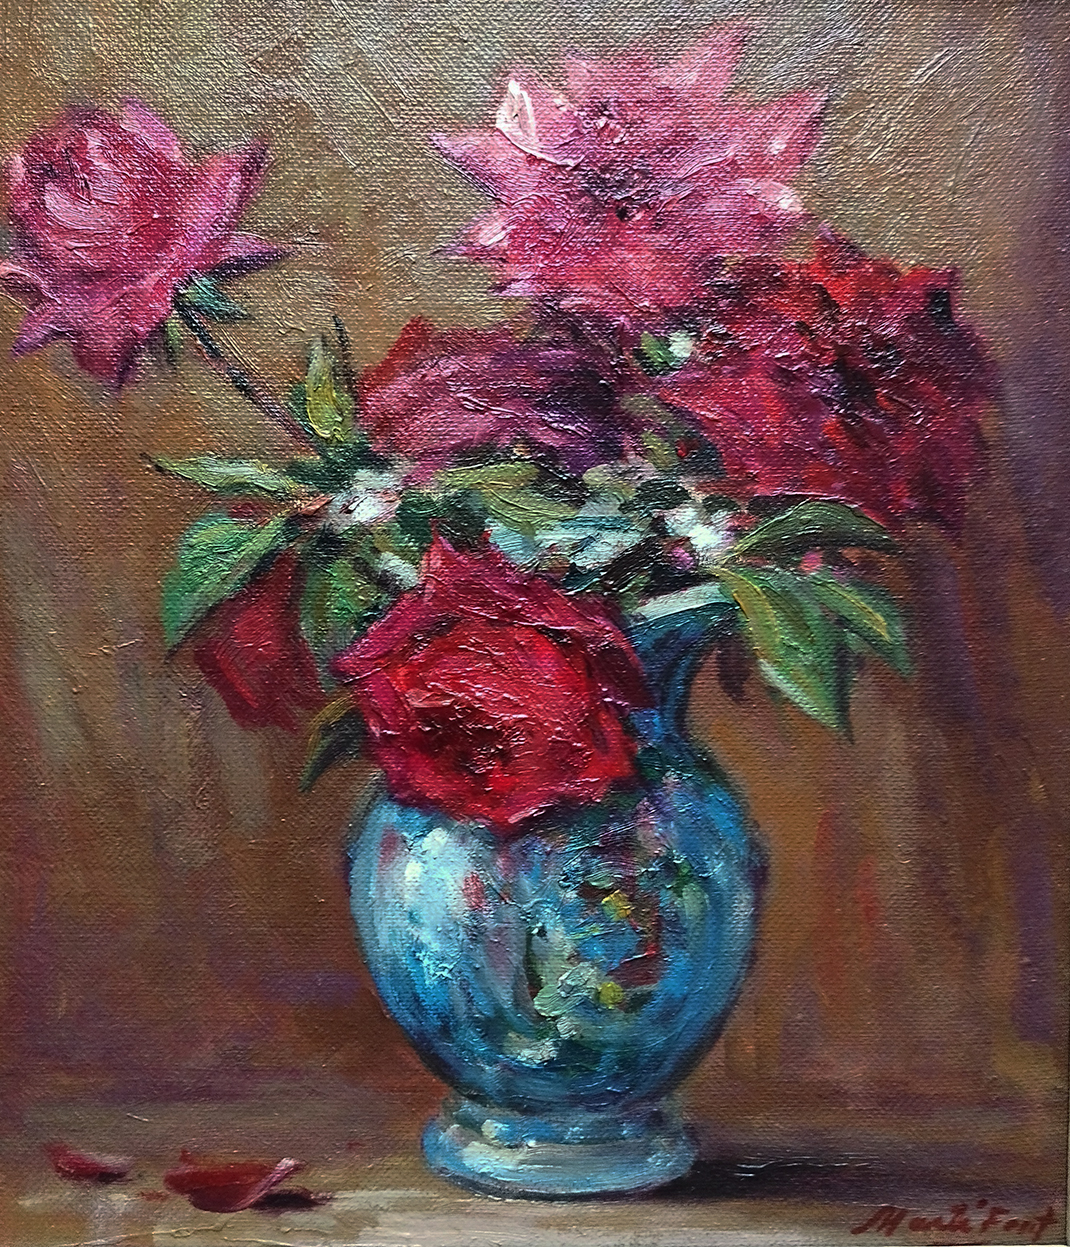 Pintor Martí font: Rosas rojas